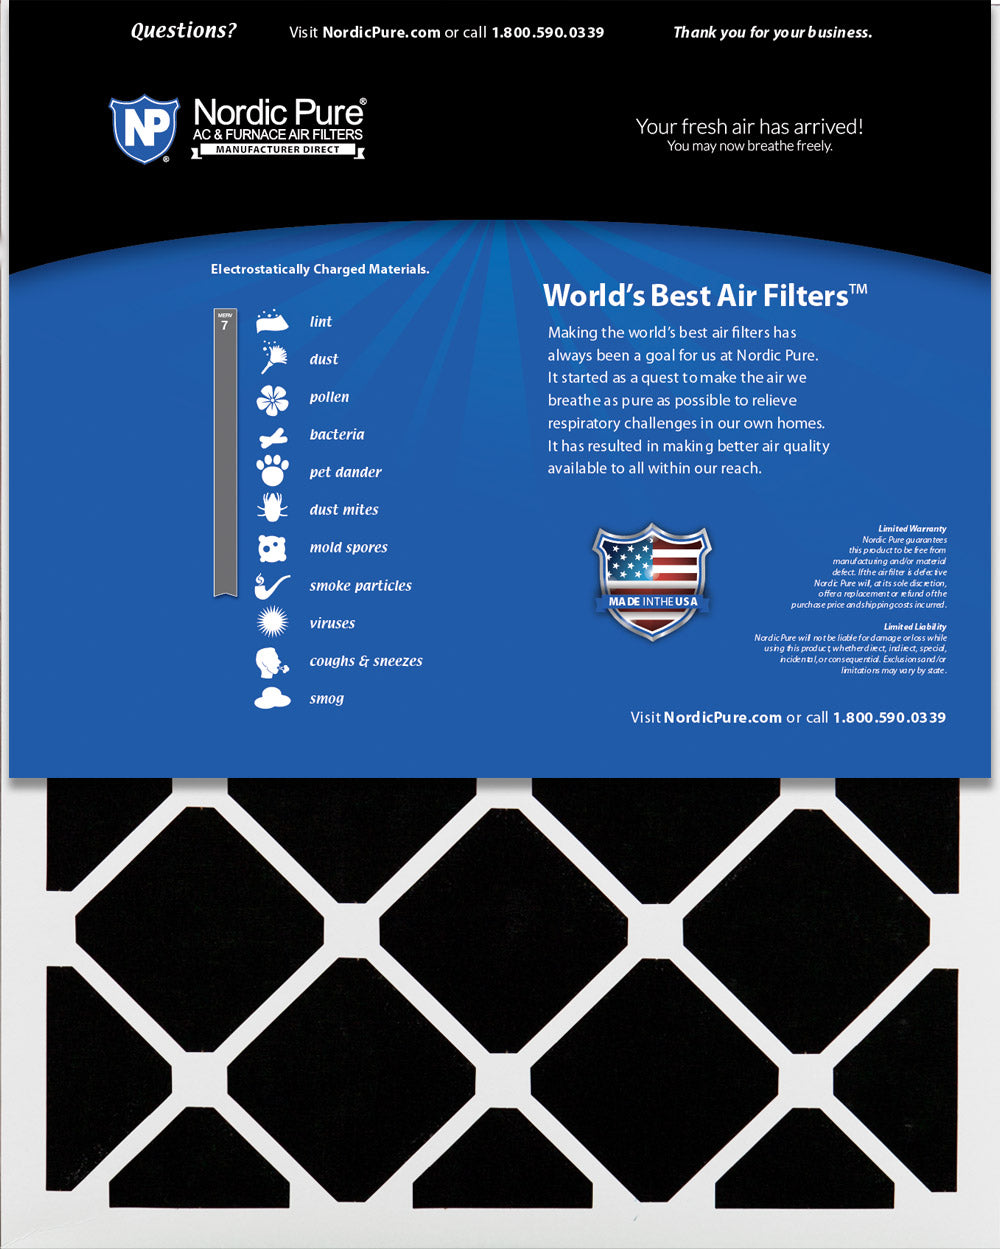 10x33x1 Exact MERV 7 Plus Carbon AC Furnace Filters